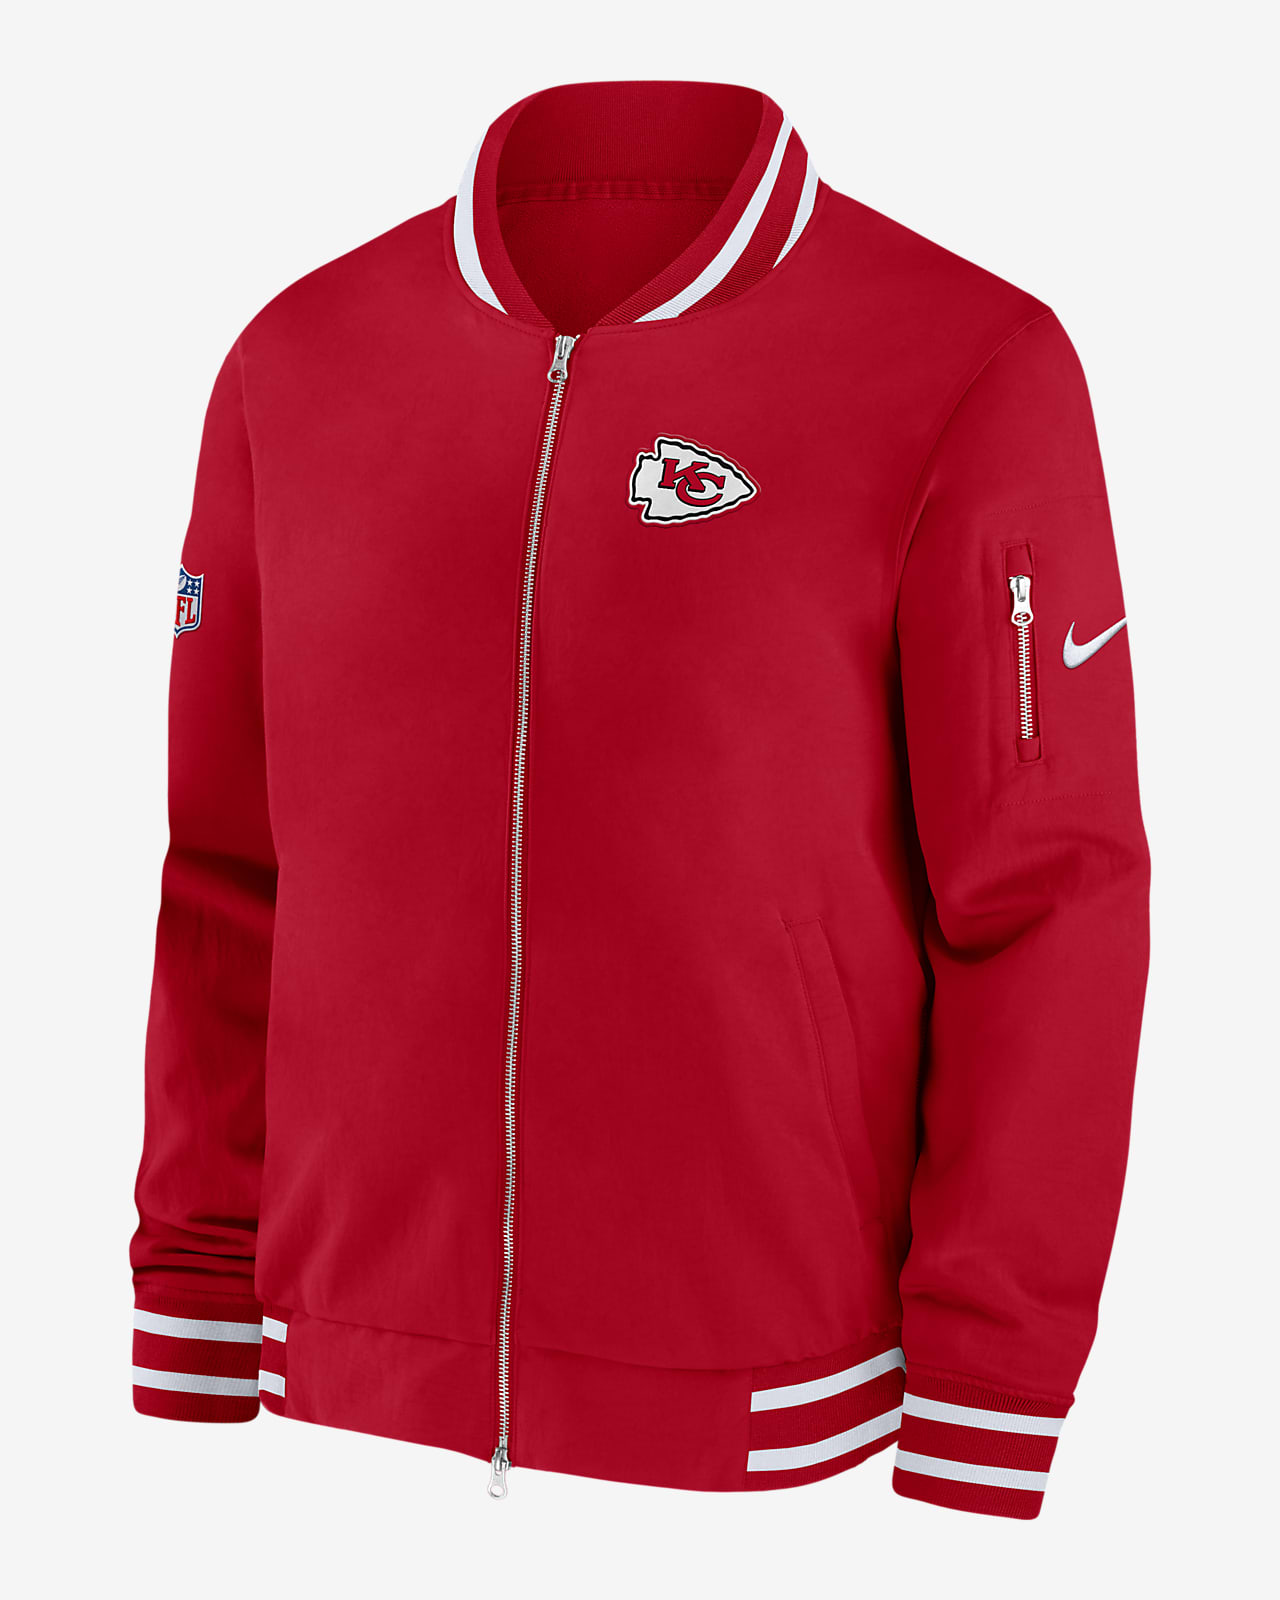 Nike Coach (NFL Kansas City Chiefs) Men's Full-Zip Bomber Jacket